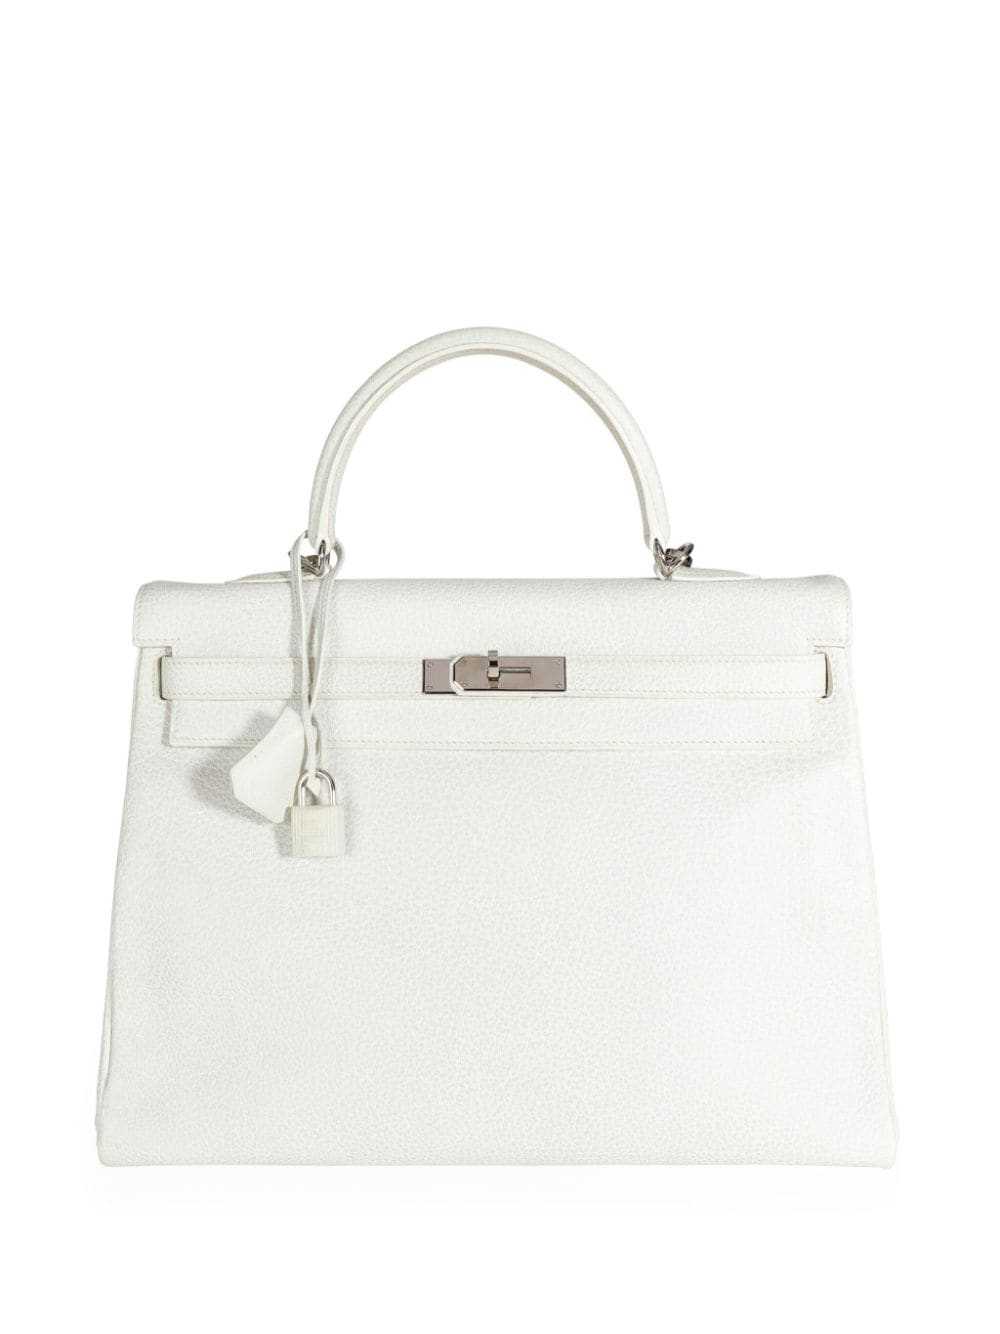 Hermès Pre-Owned Retourné Kelly 35 handbag - White - image 1